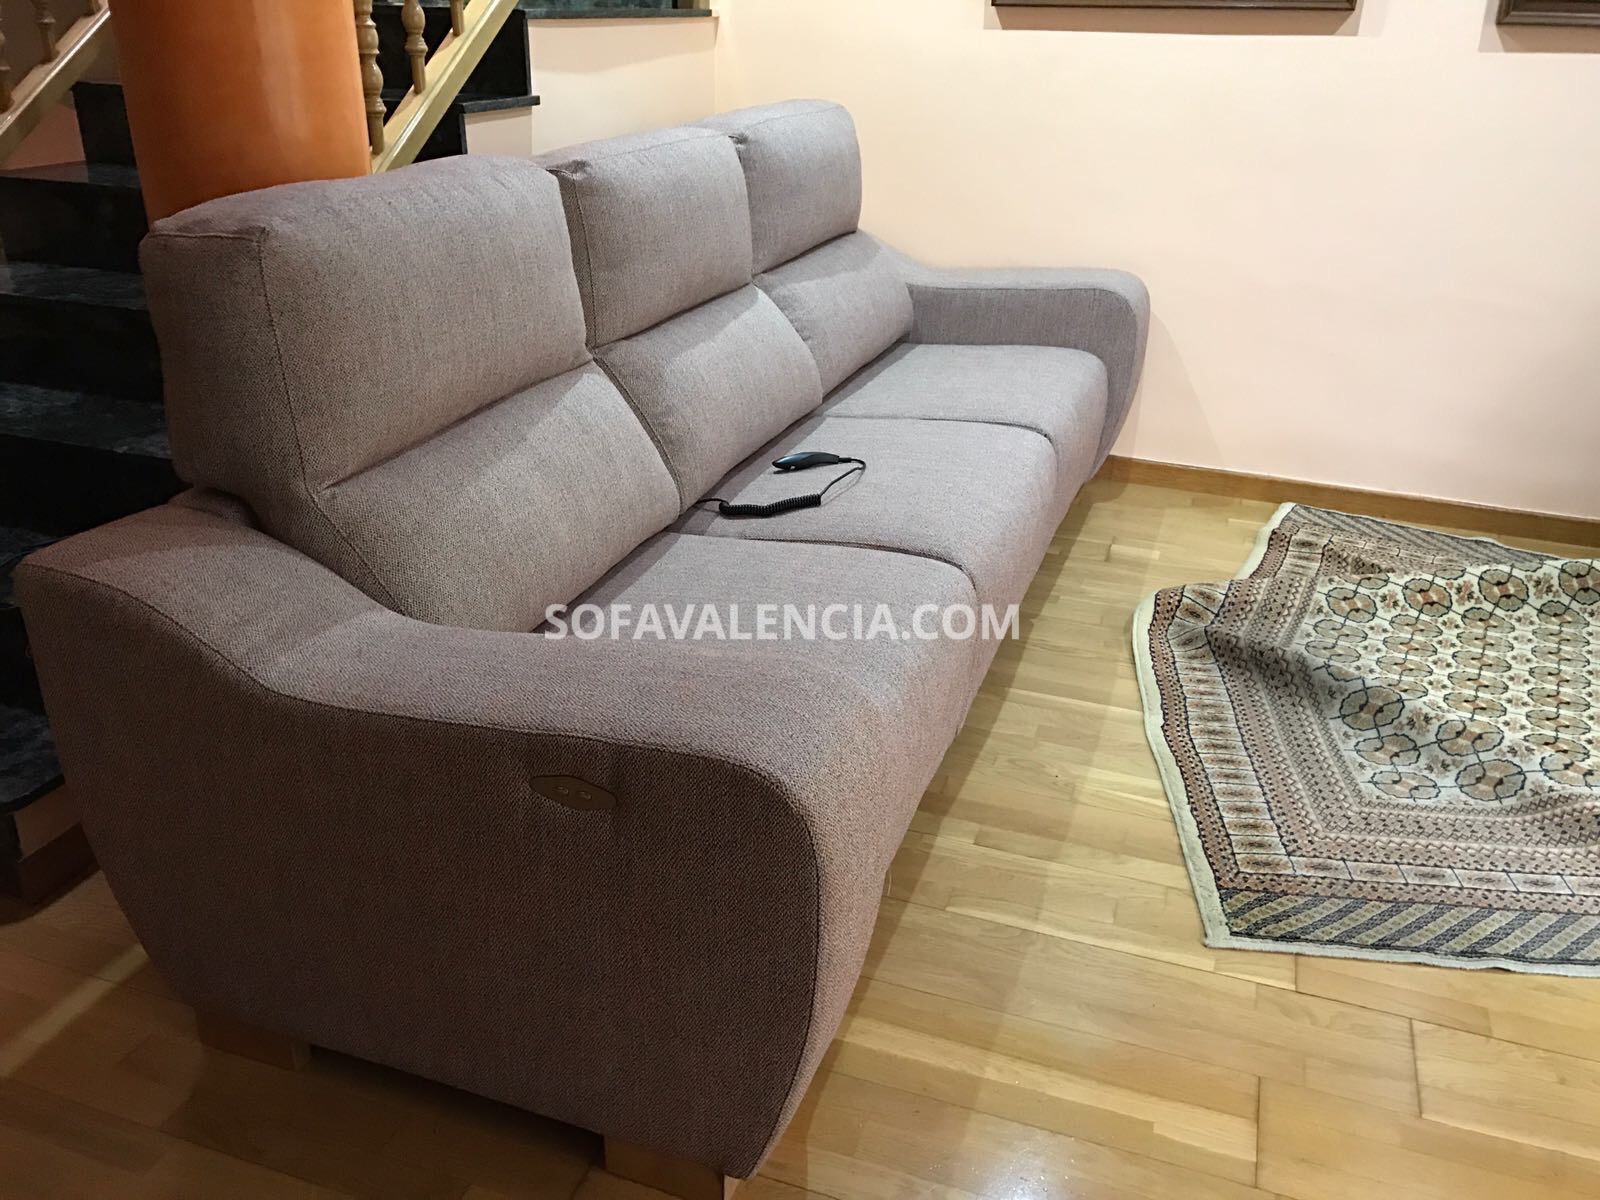 sofa-valencia-fotos-clientes-14